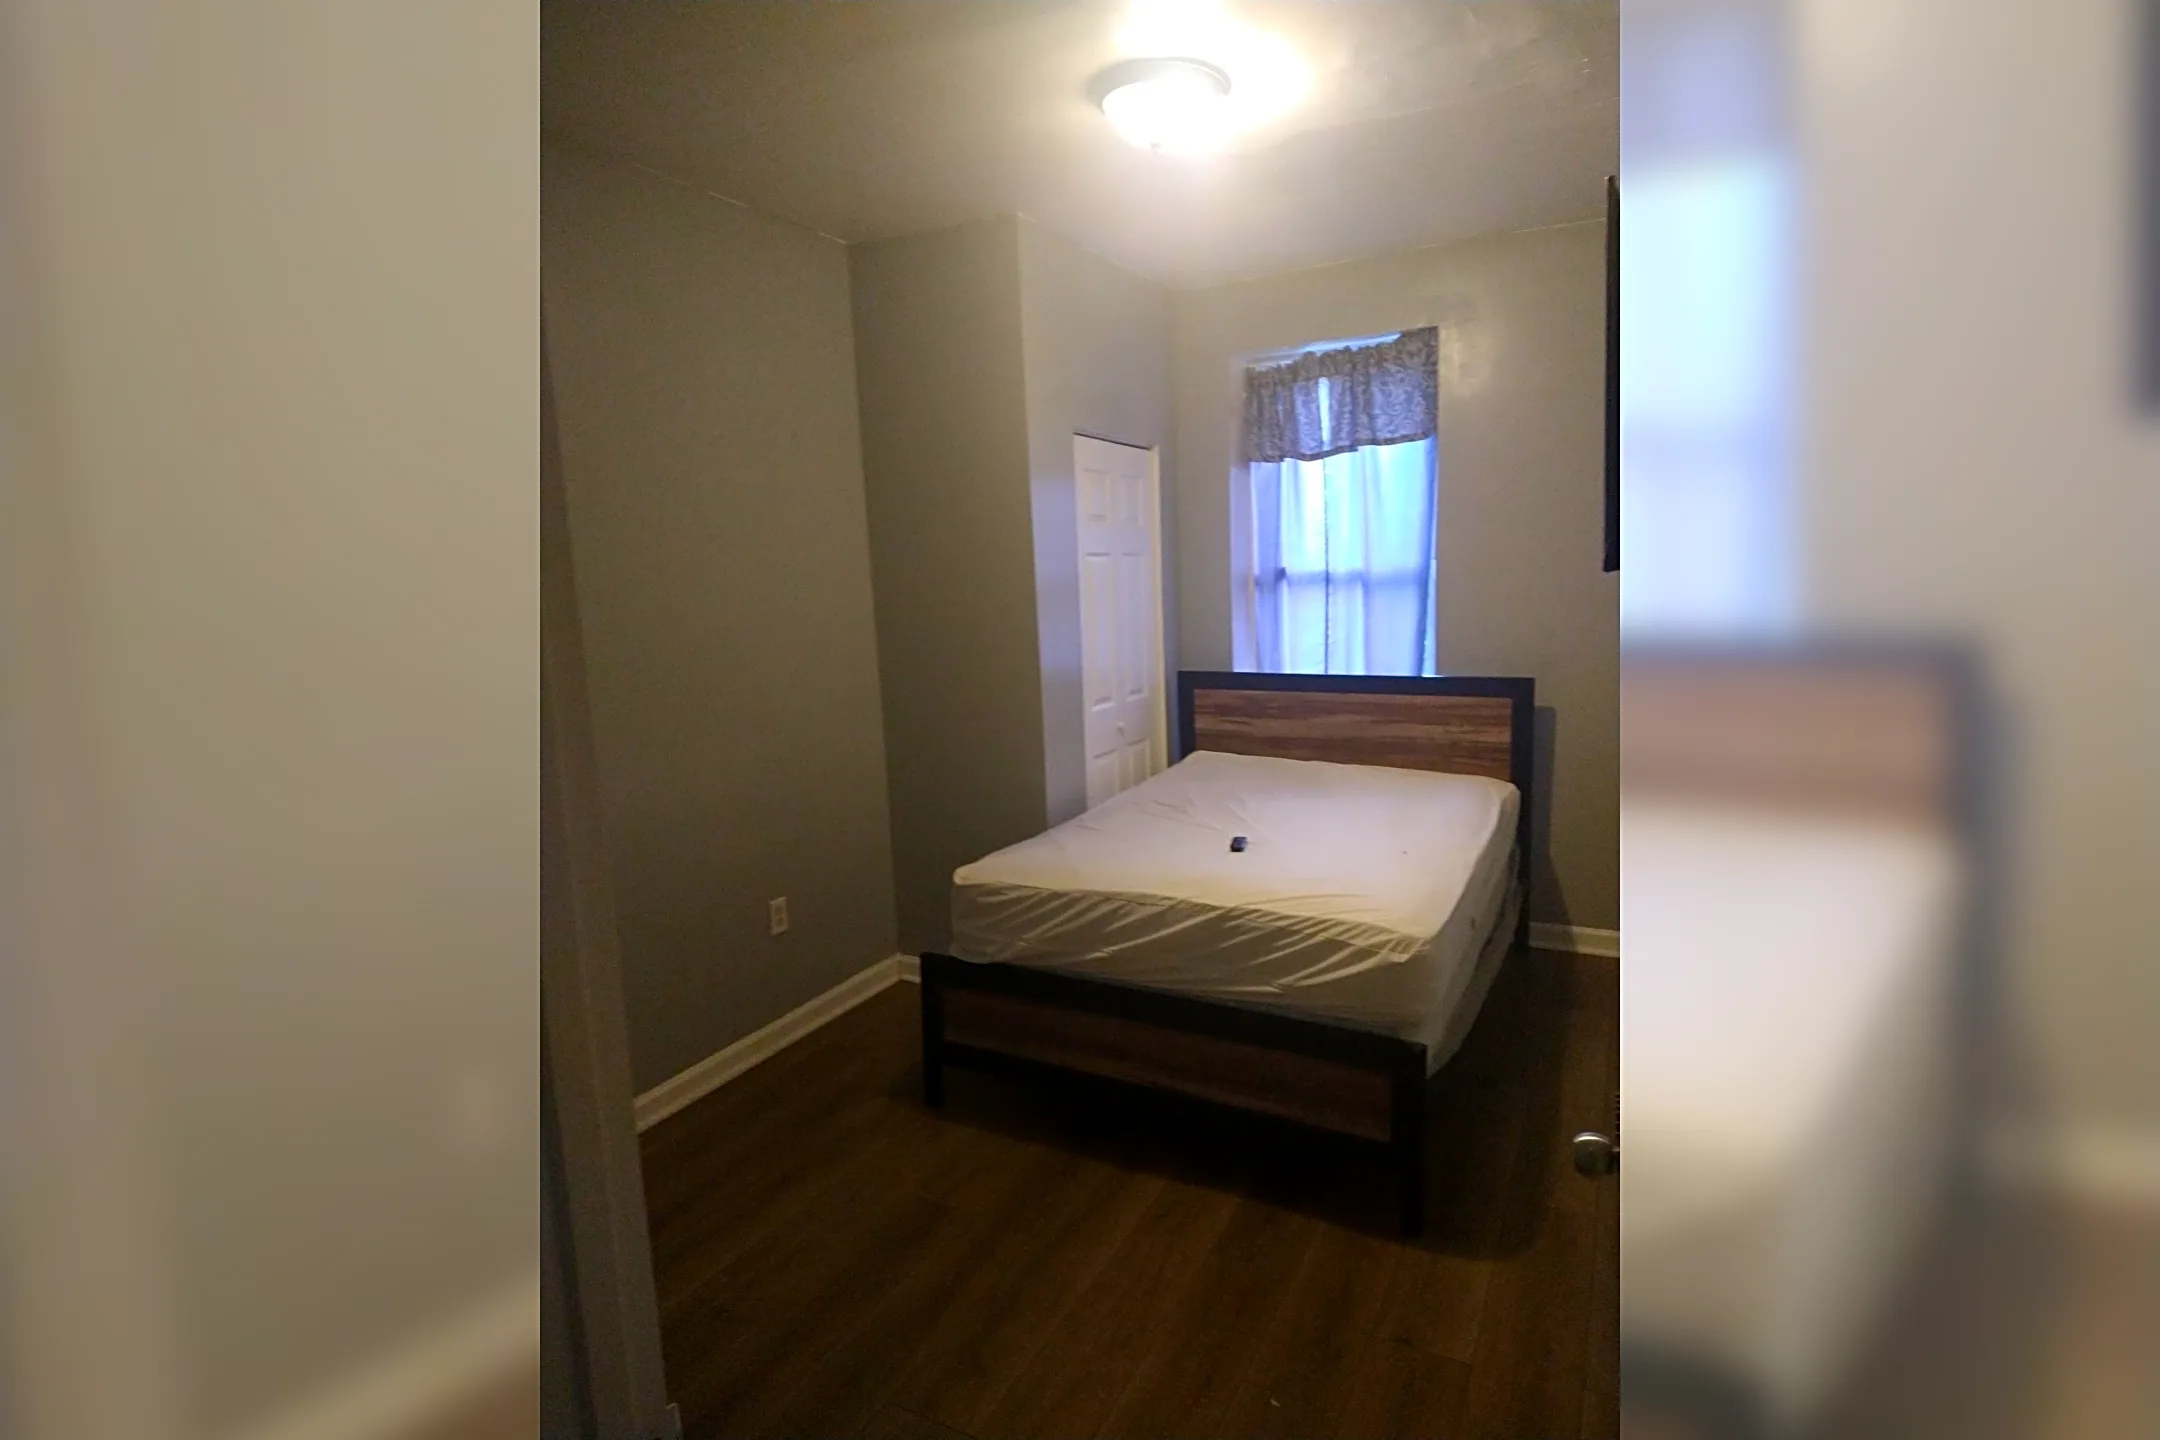 Bedroom - 4624 Pimlico Rd - Baltimore, MD